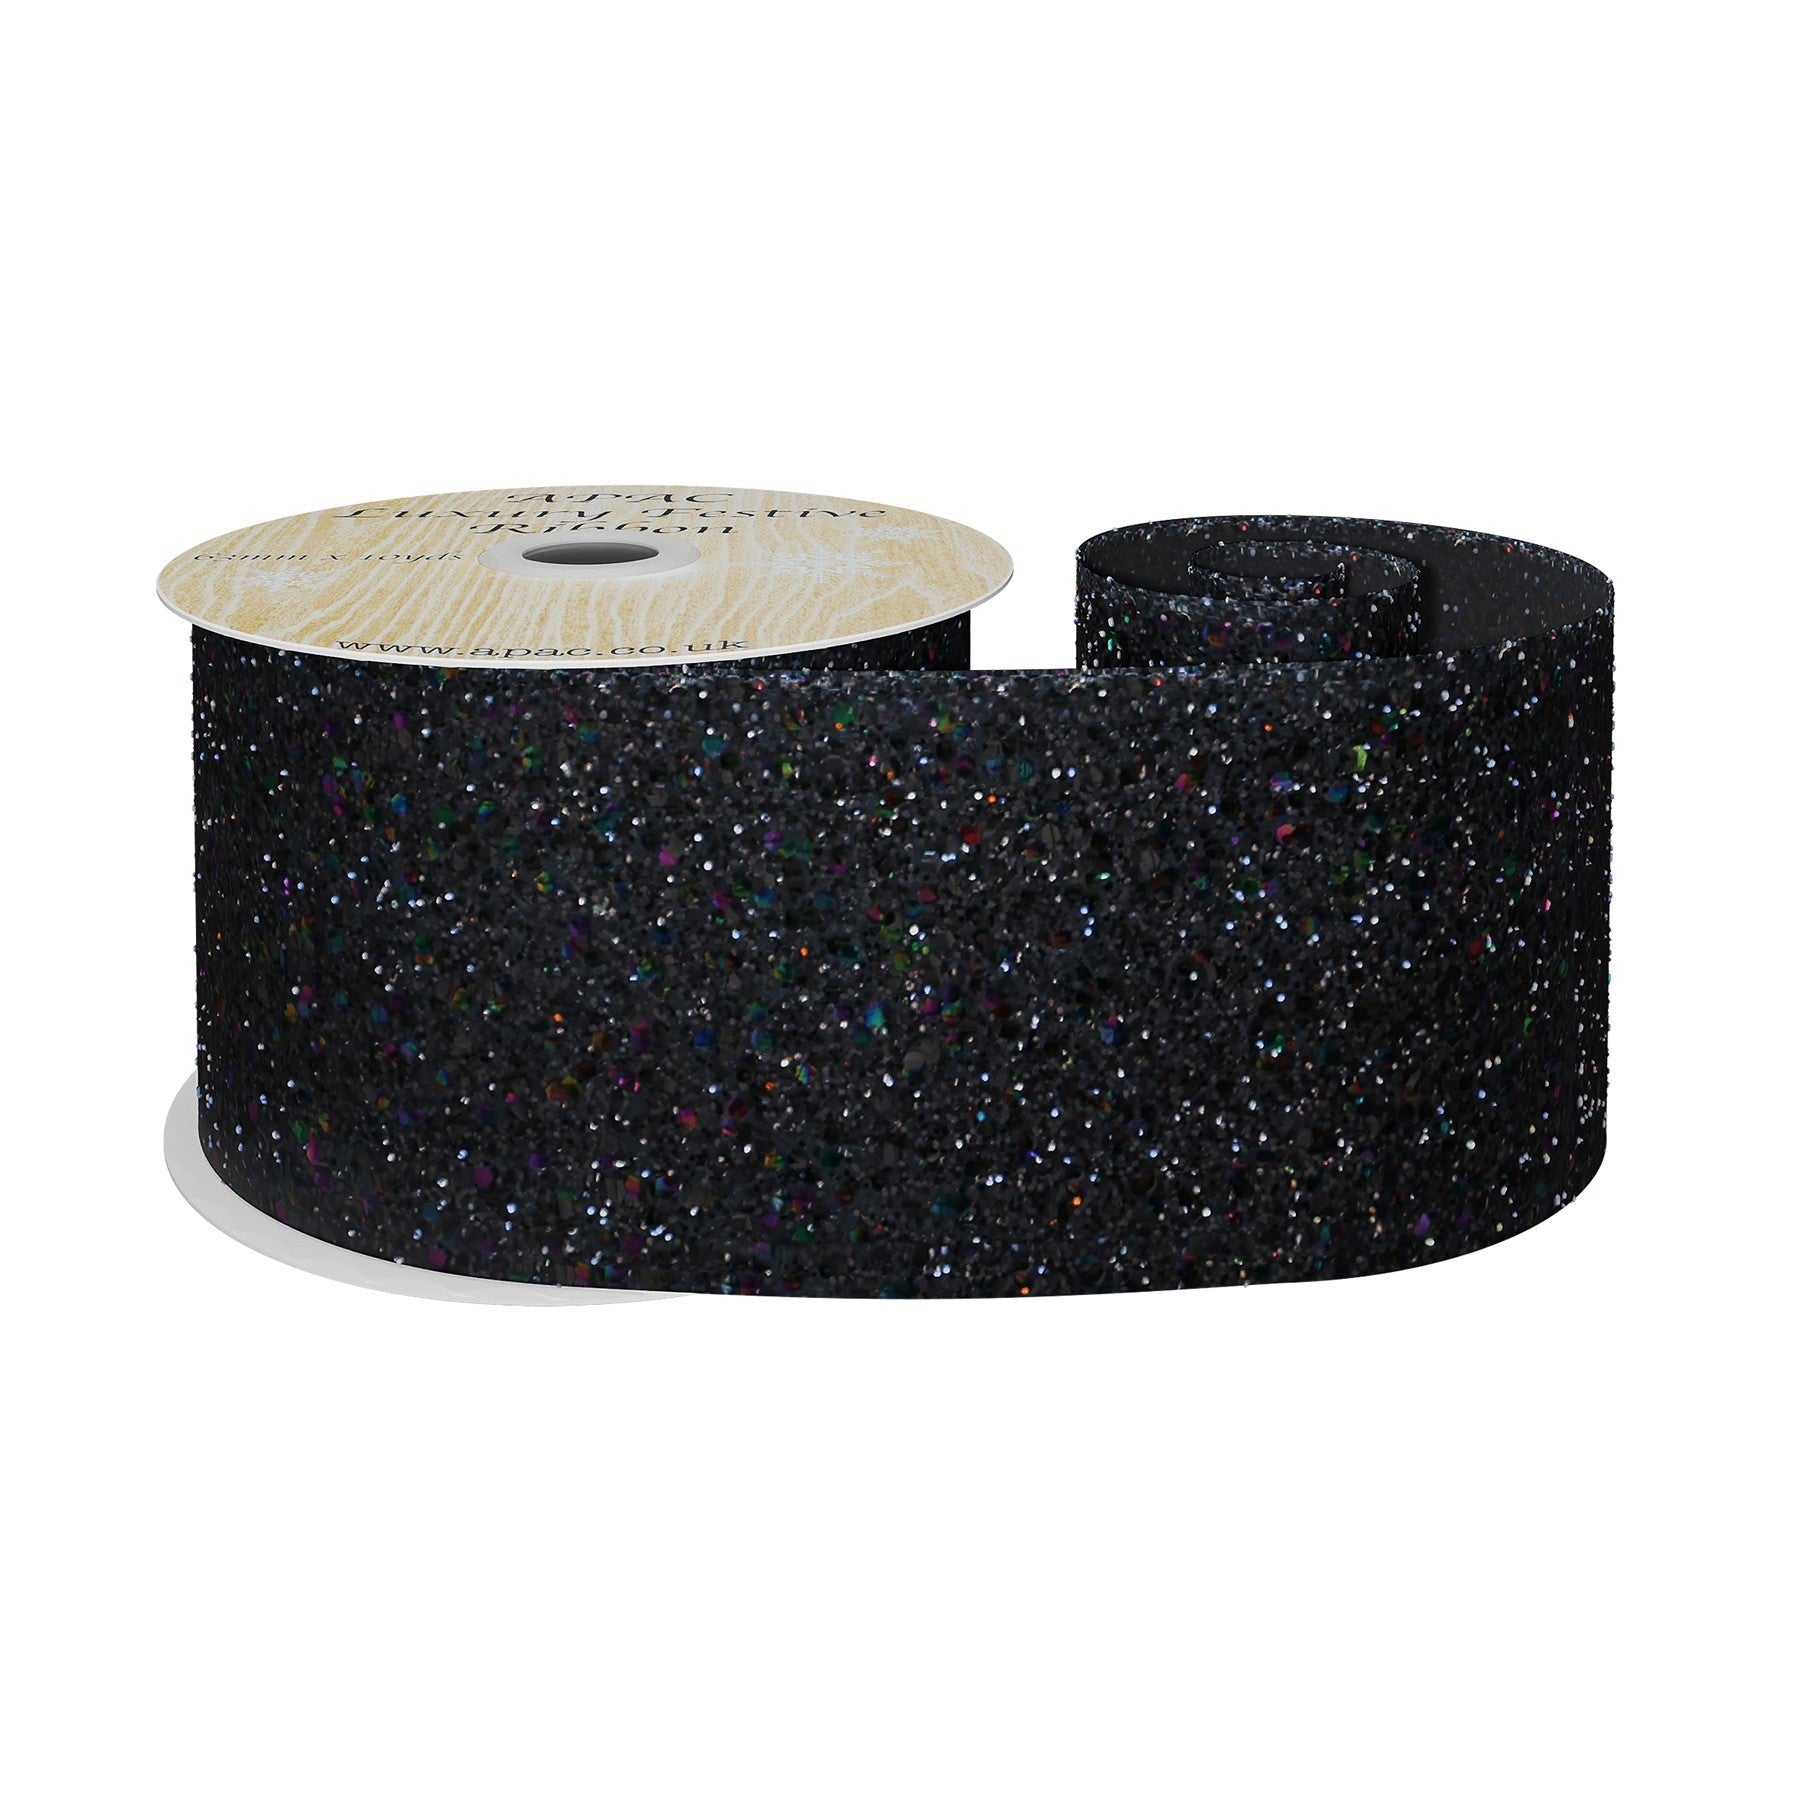 View Black Glitter Wired Ribbon 63mm x 10y information